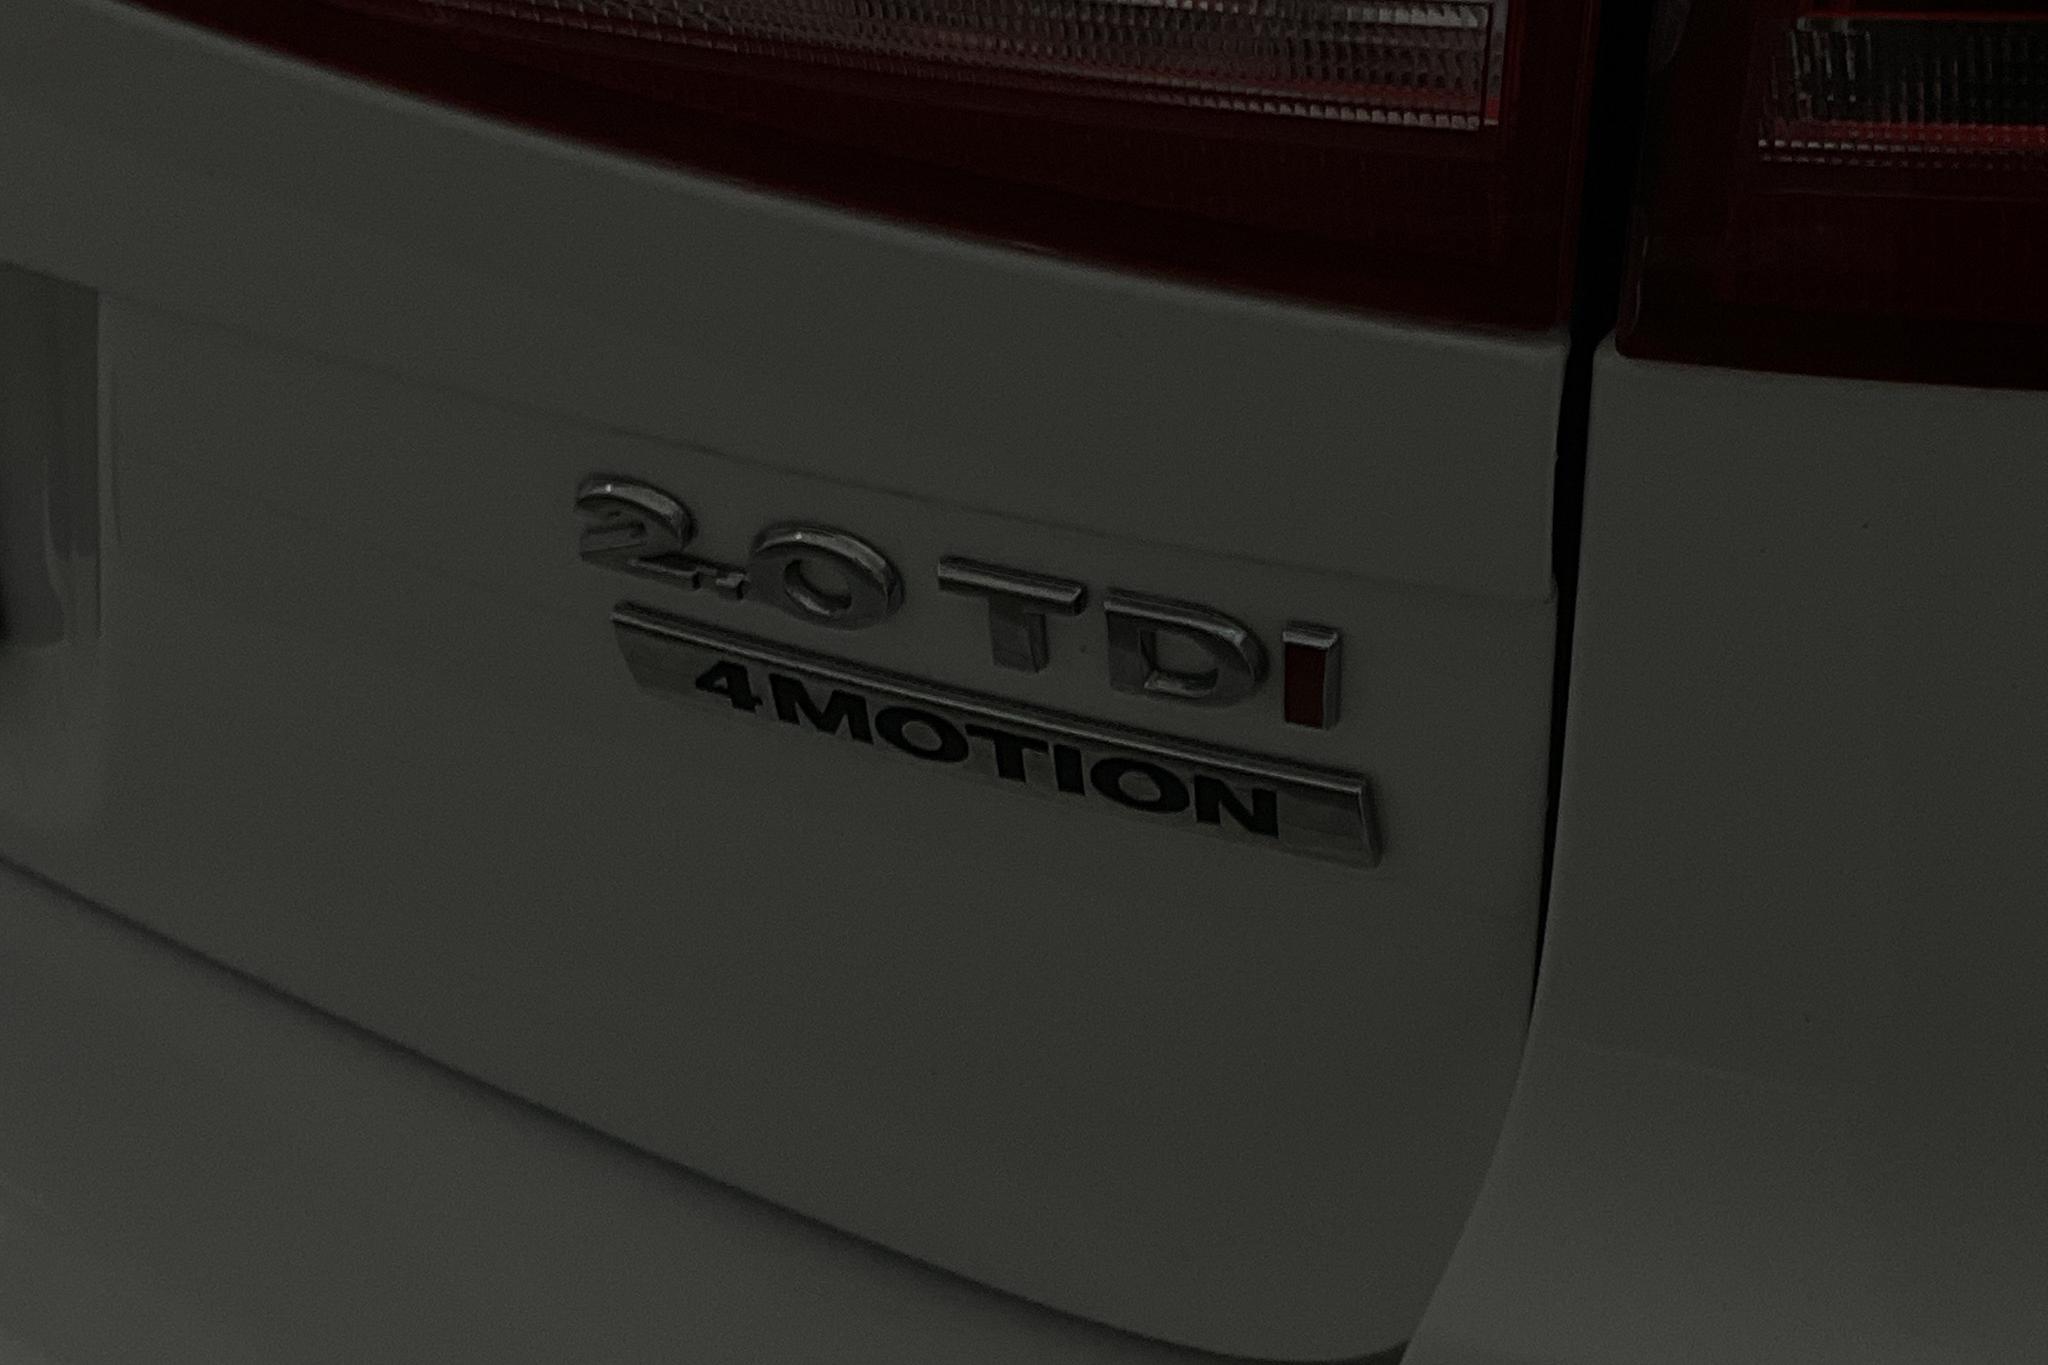 VW Passat Alltrack 2.0 TDI BlueMotion Technology 4Motion (177hk) - 203 050 km - Automatic - white - 2015